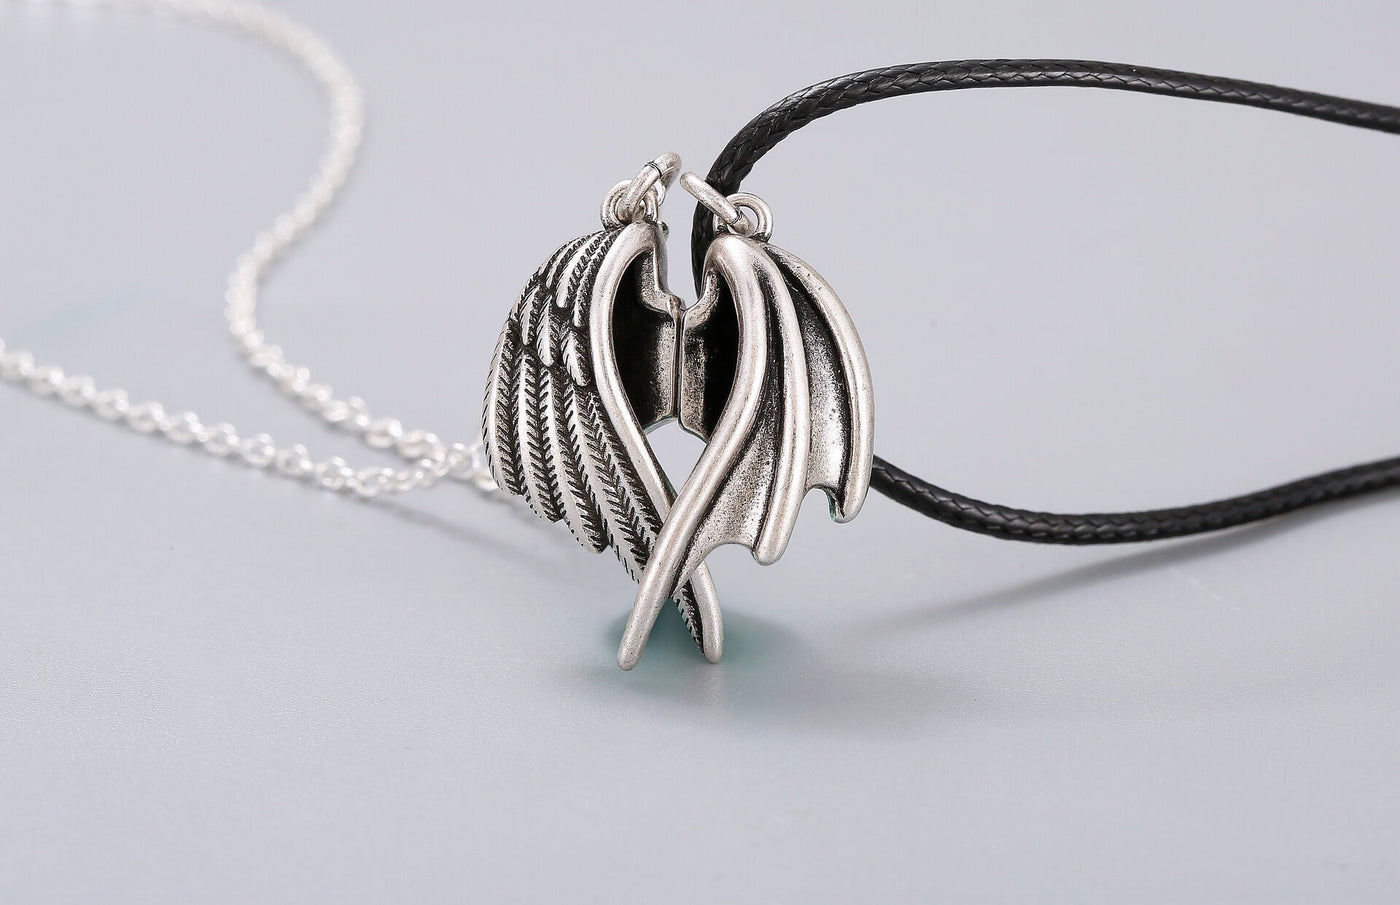 925 Sterling Silver Yujinfu Fashion Couple Chain Magnetic Heart